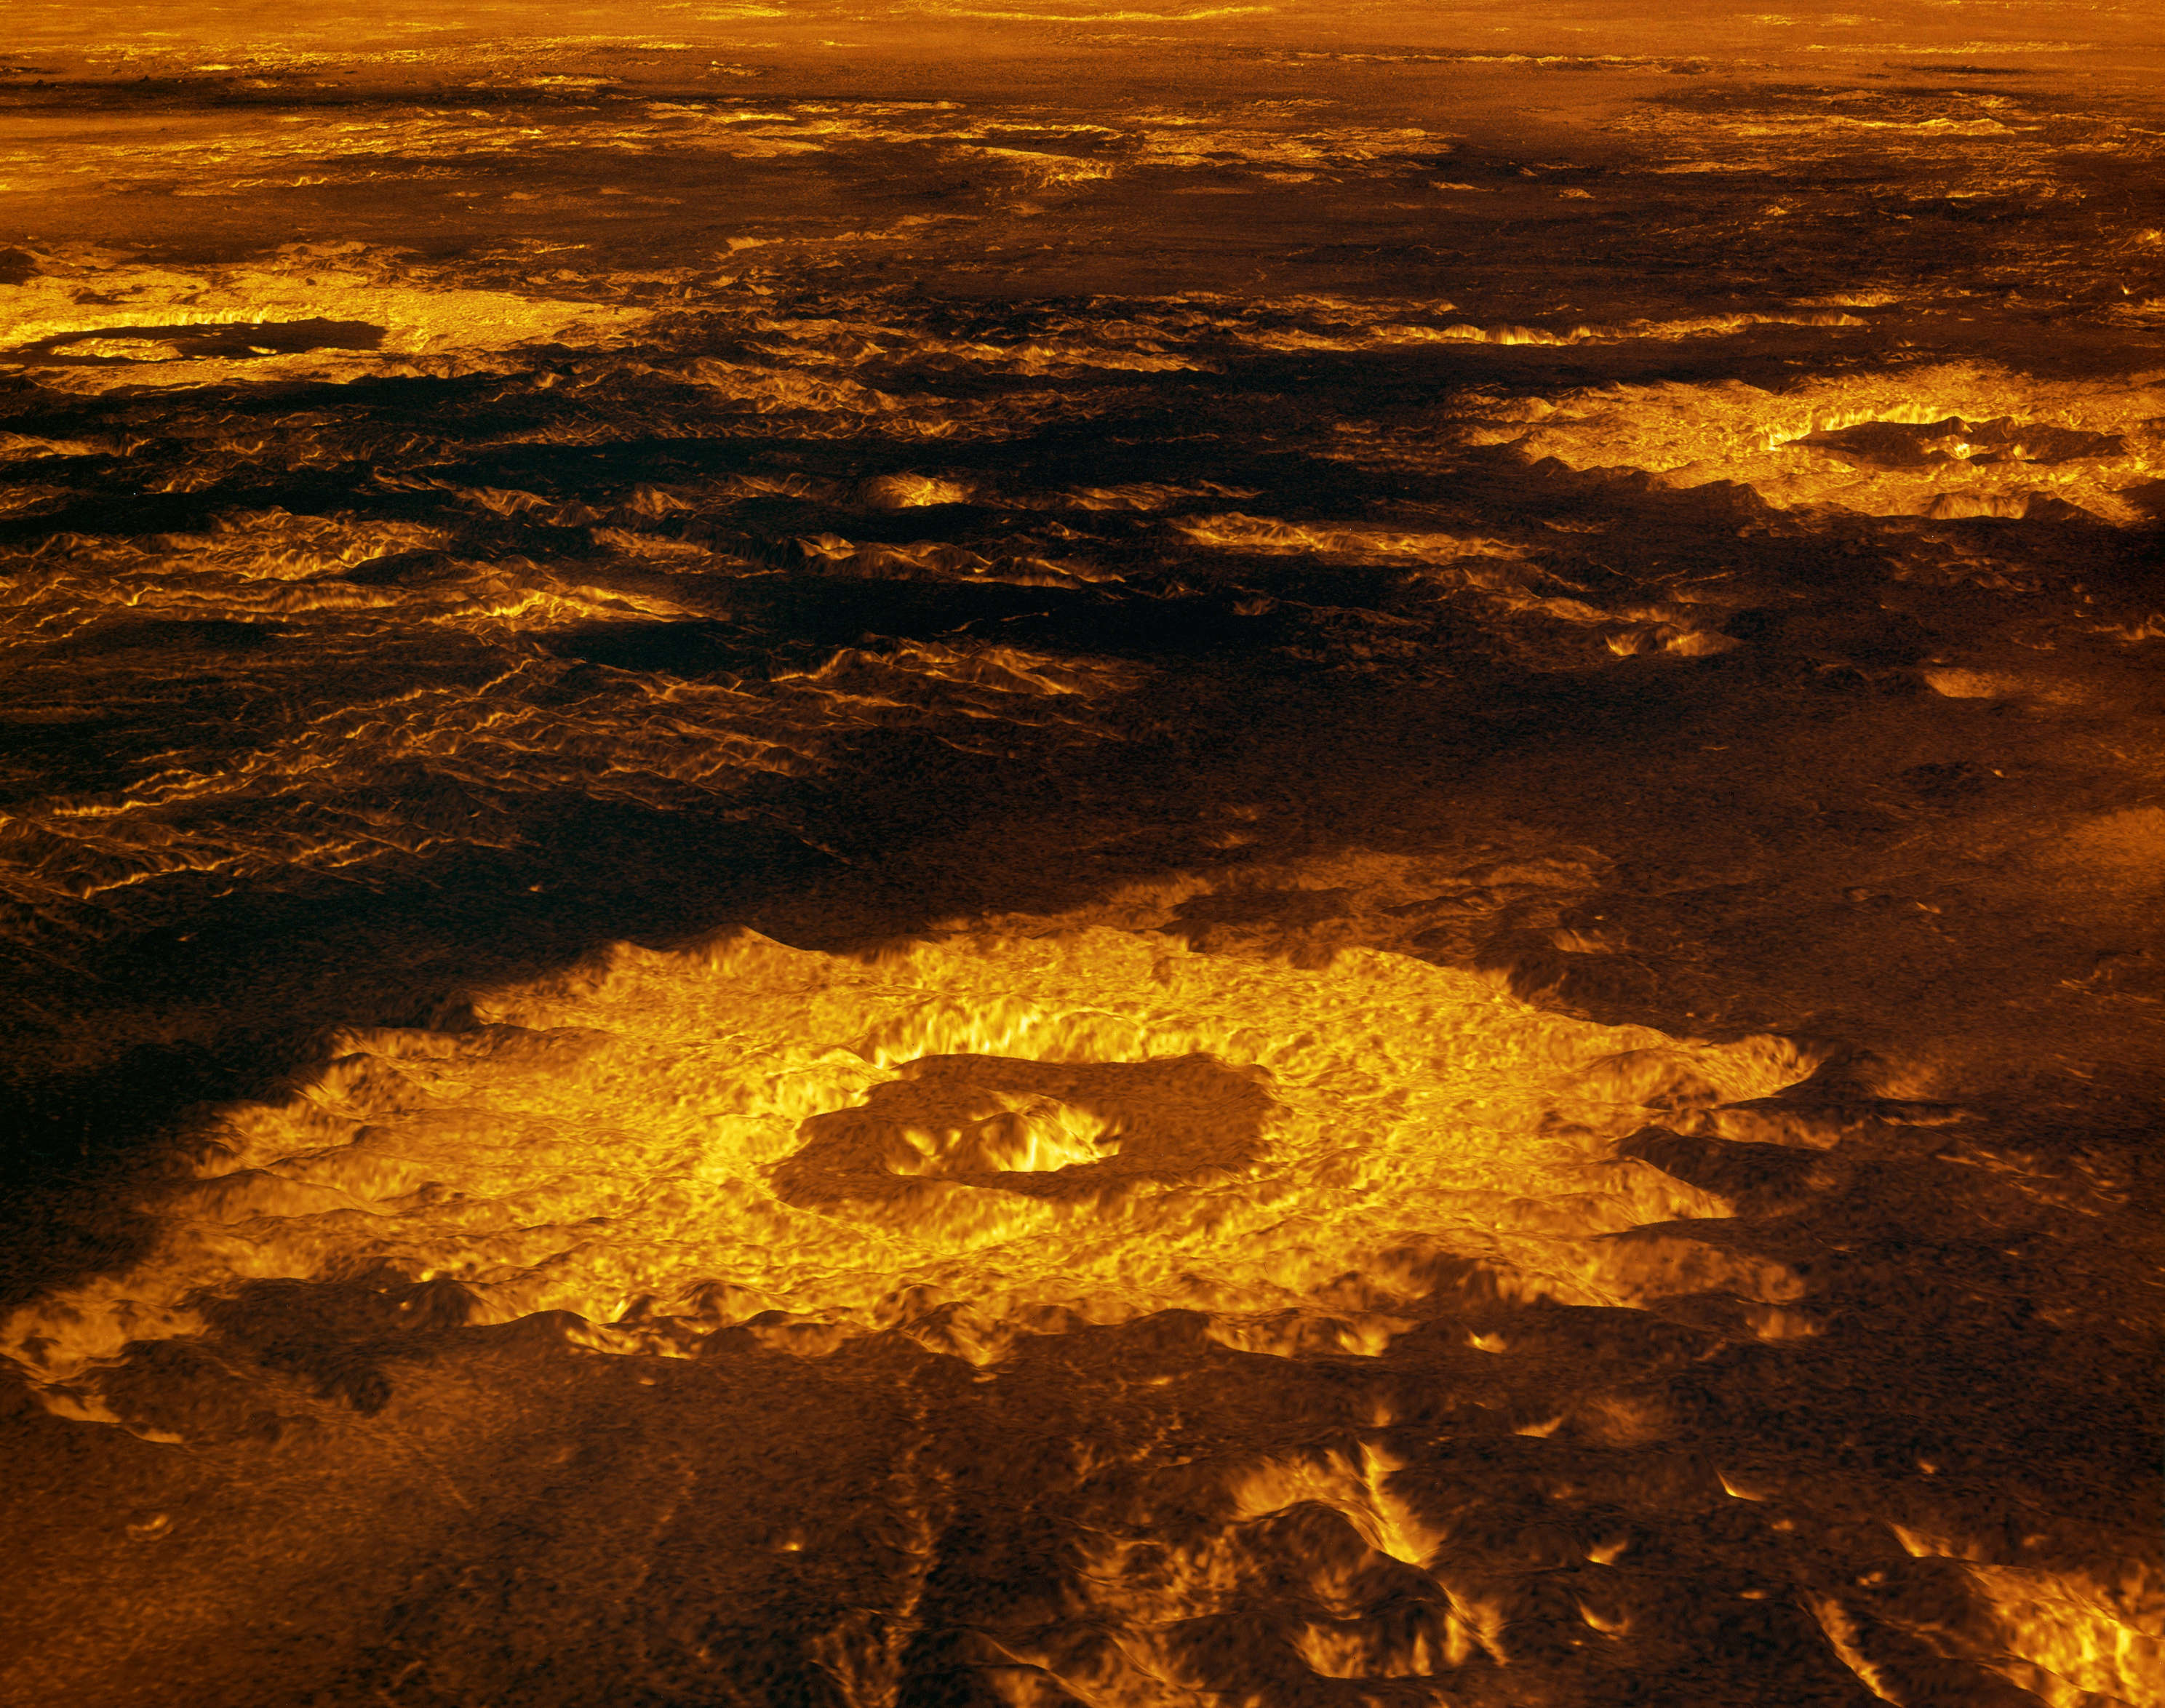 Impact Craters on Venus imaged by NASA Magellan